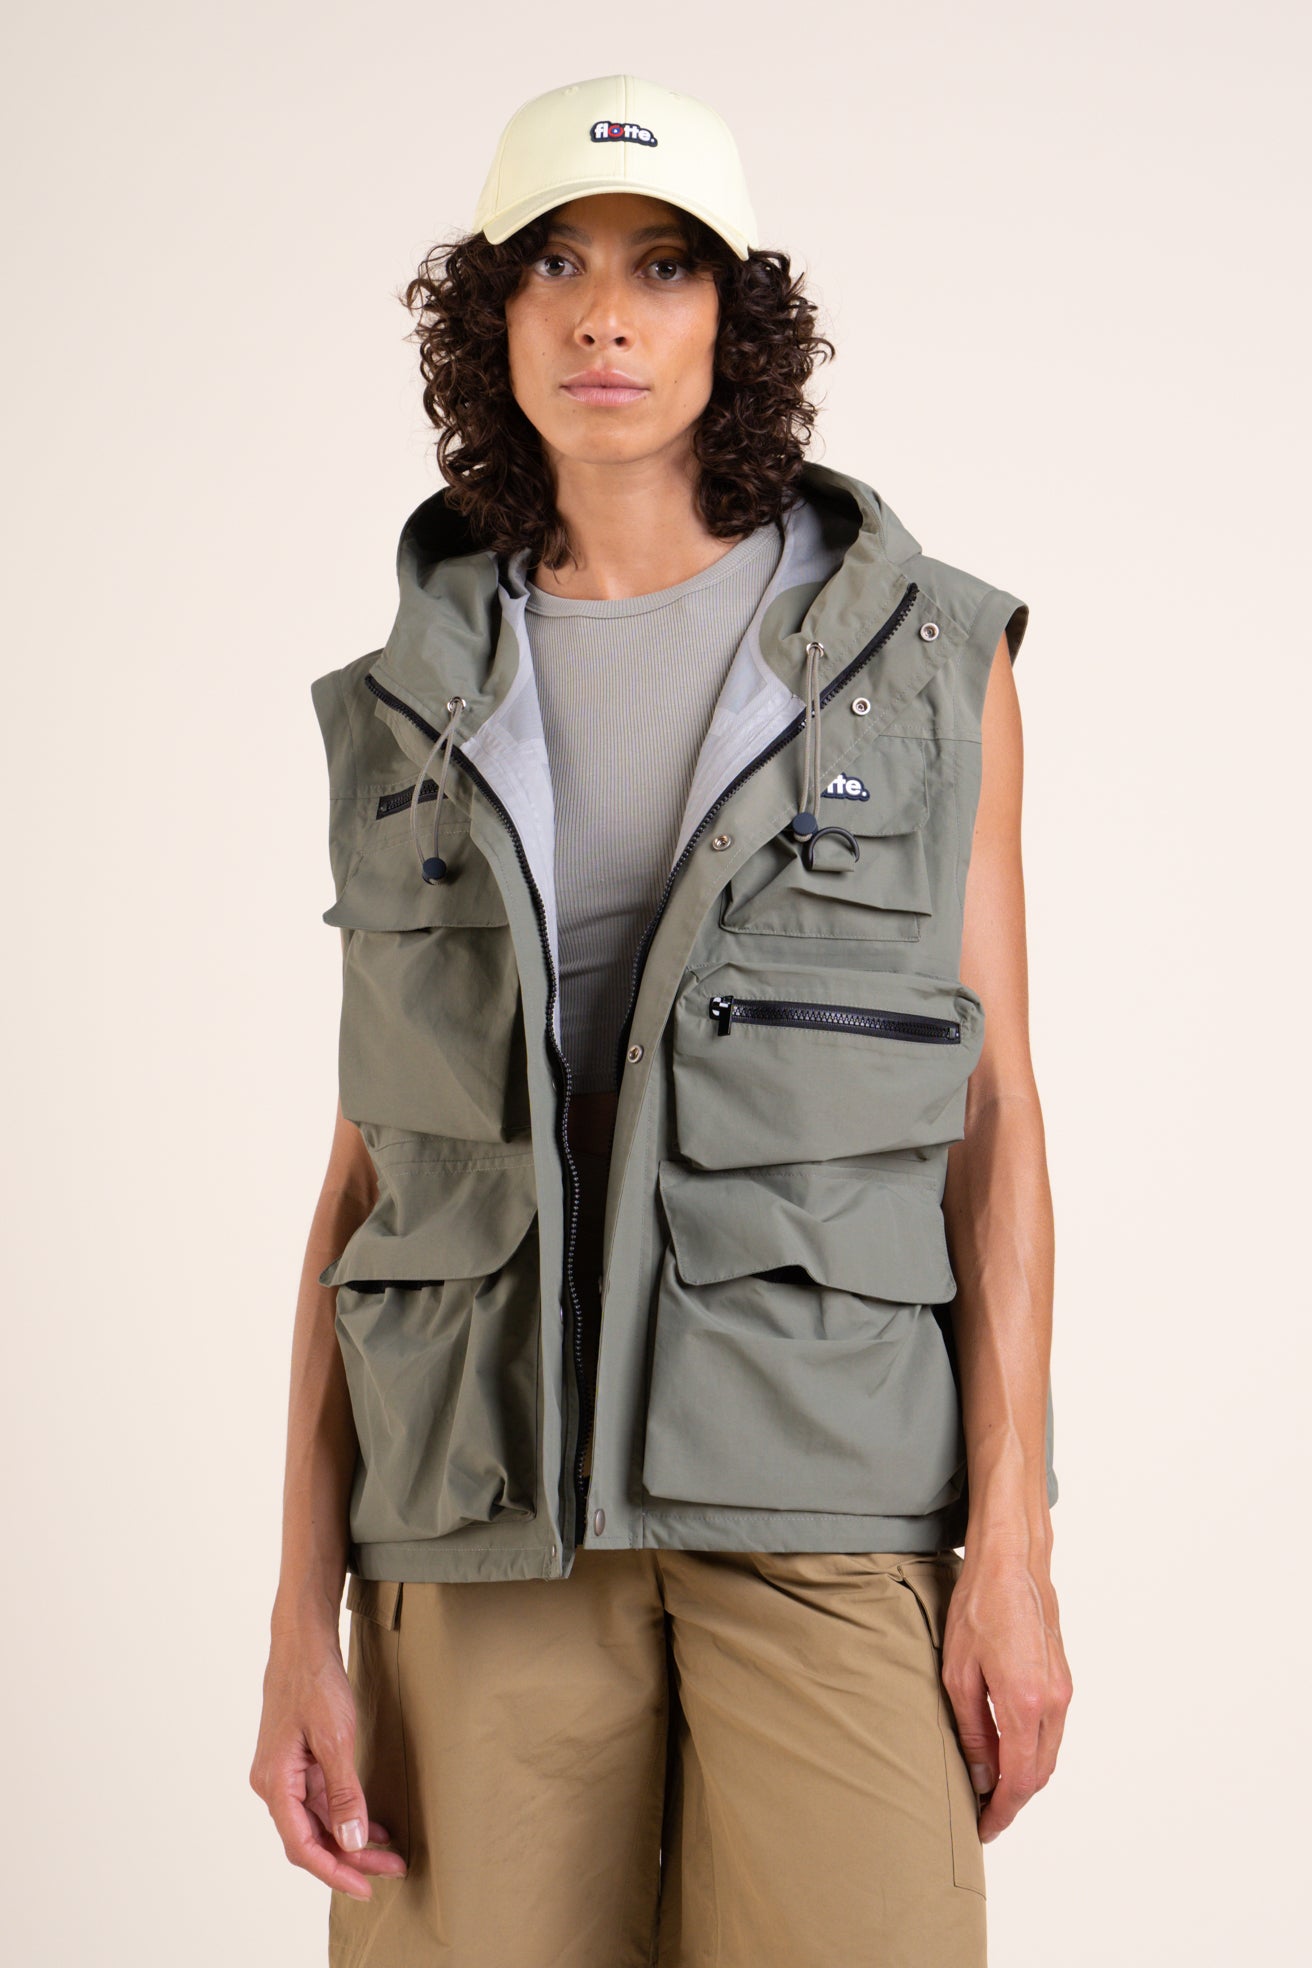 Saint Cyr - multipocket jacket - Flotte #couleur_kaki